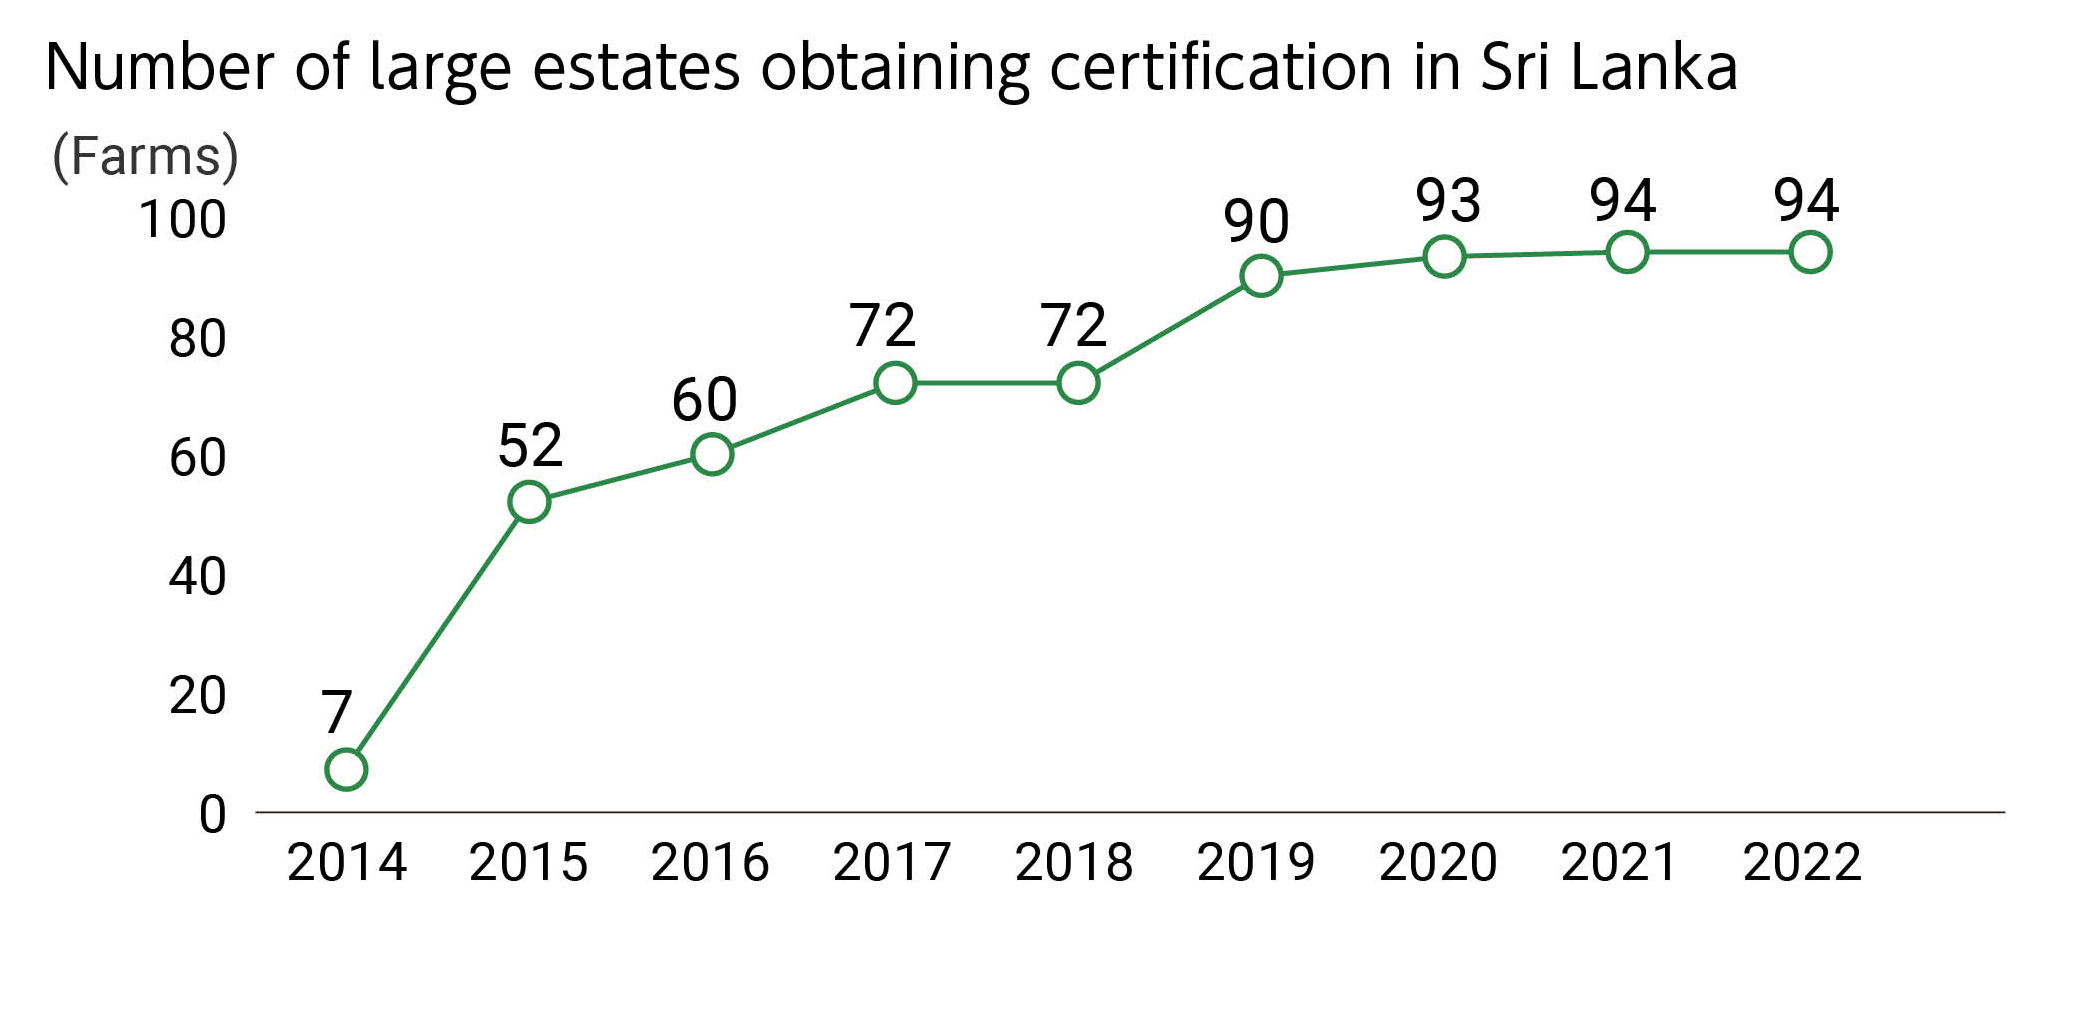 Number of tea farms obtaining certification in Sri Lanka